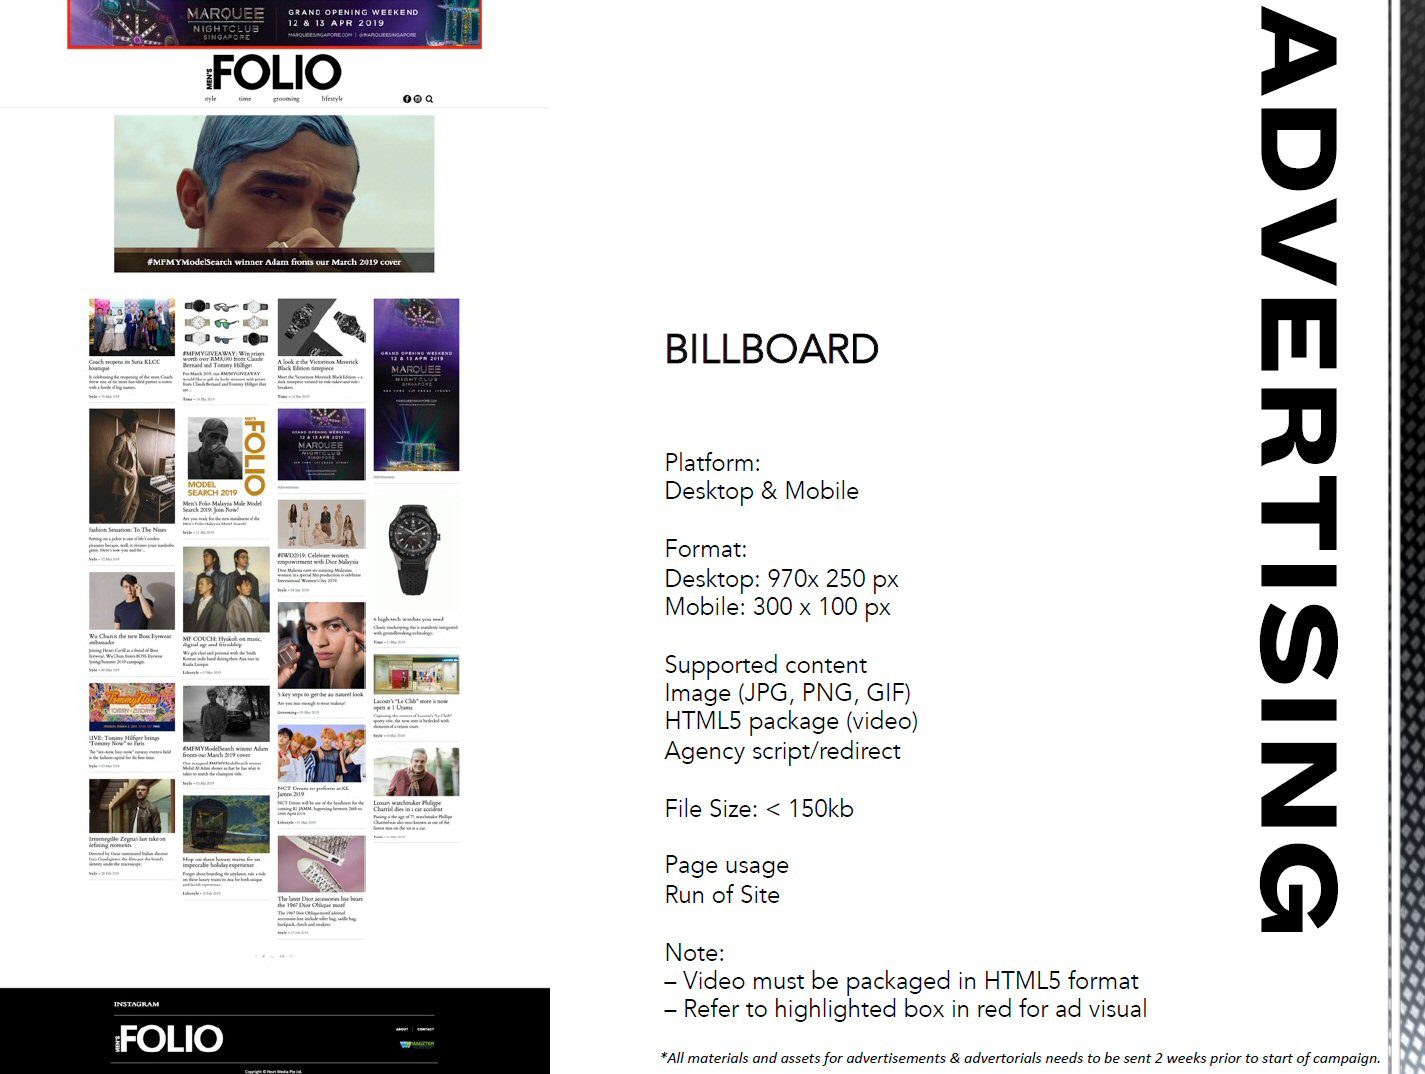 Men's Folio Malaysia Billboard